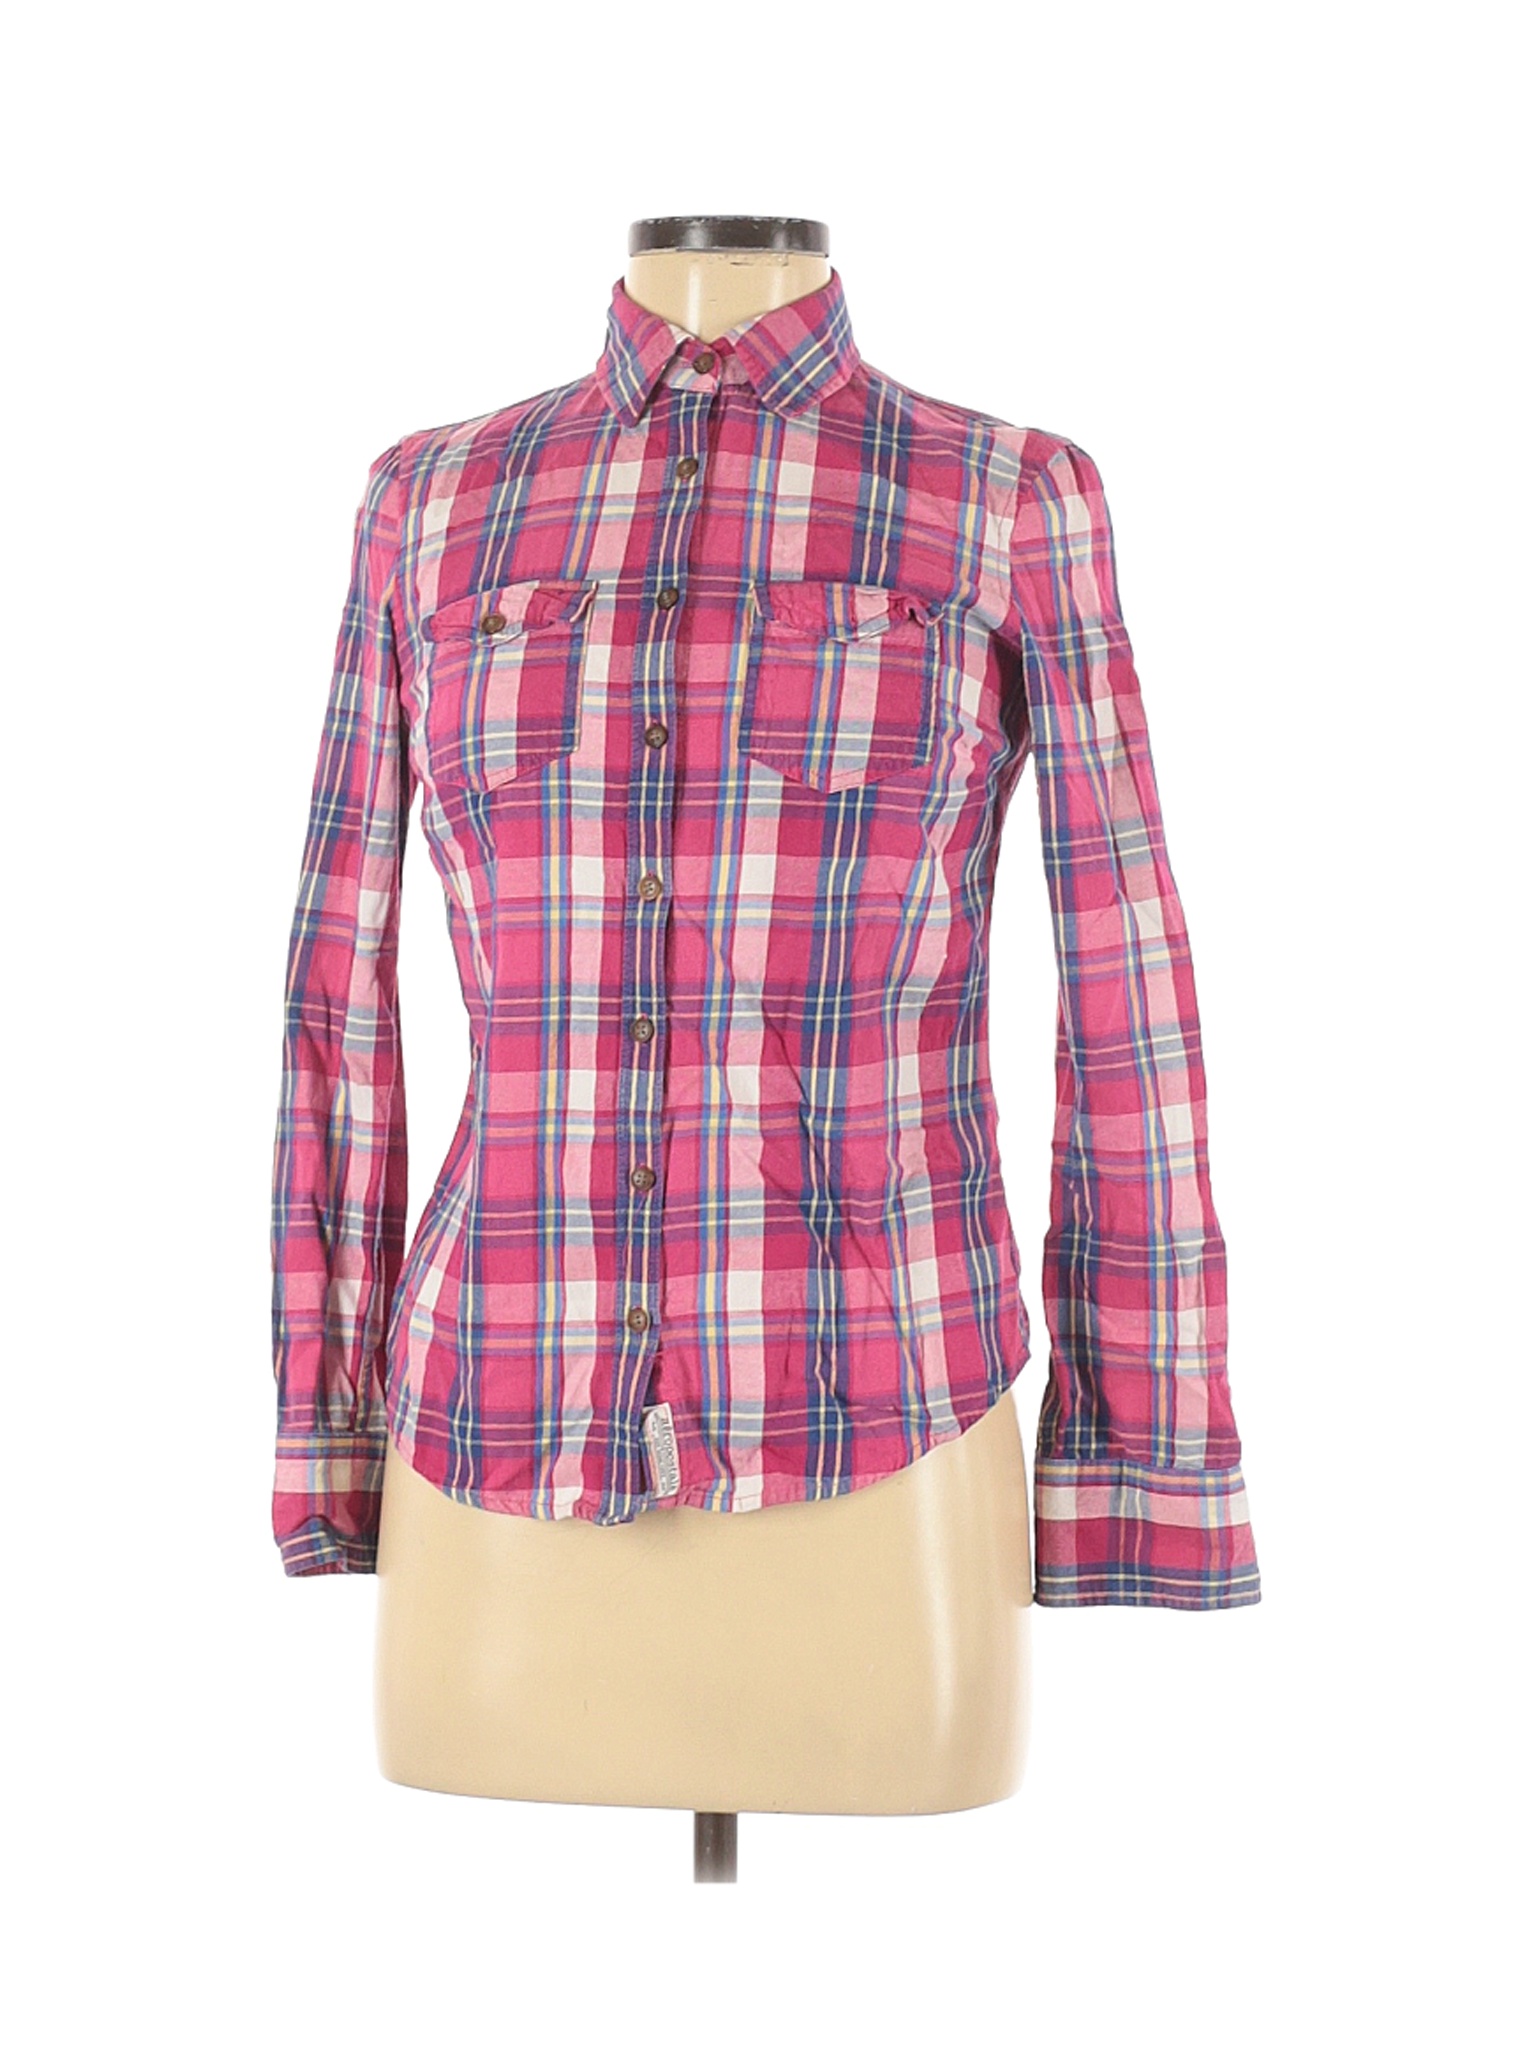 Aeropostale Women Pink Long Sleeve Button-Down Shirt S | eBay